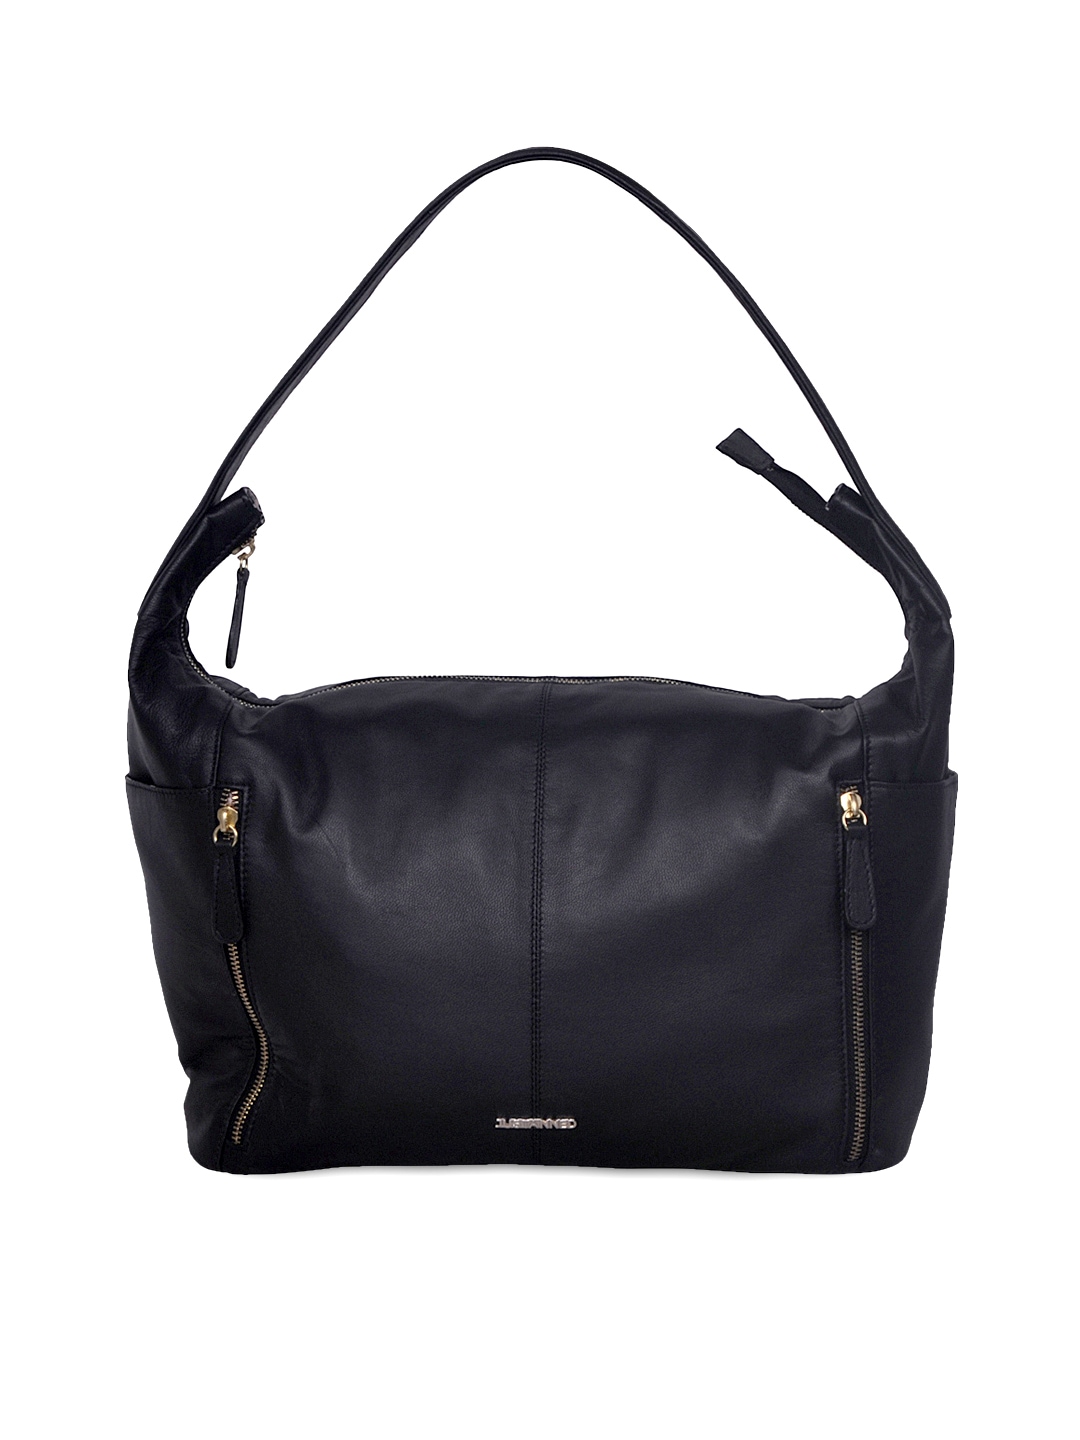 Myntra Justanned Black Leather Shoulder Bag 662627 | Buy Myntra Justanned Handbags at best price ...